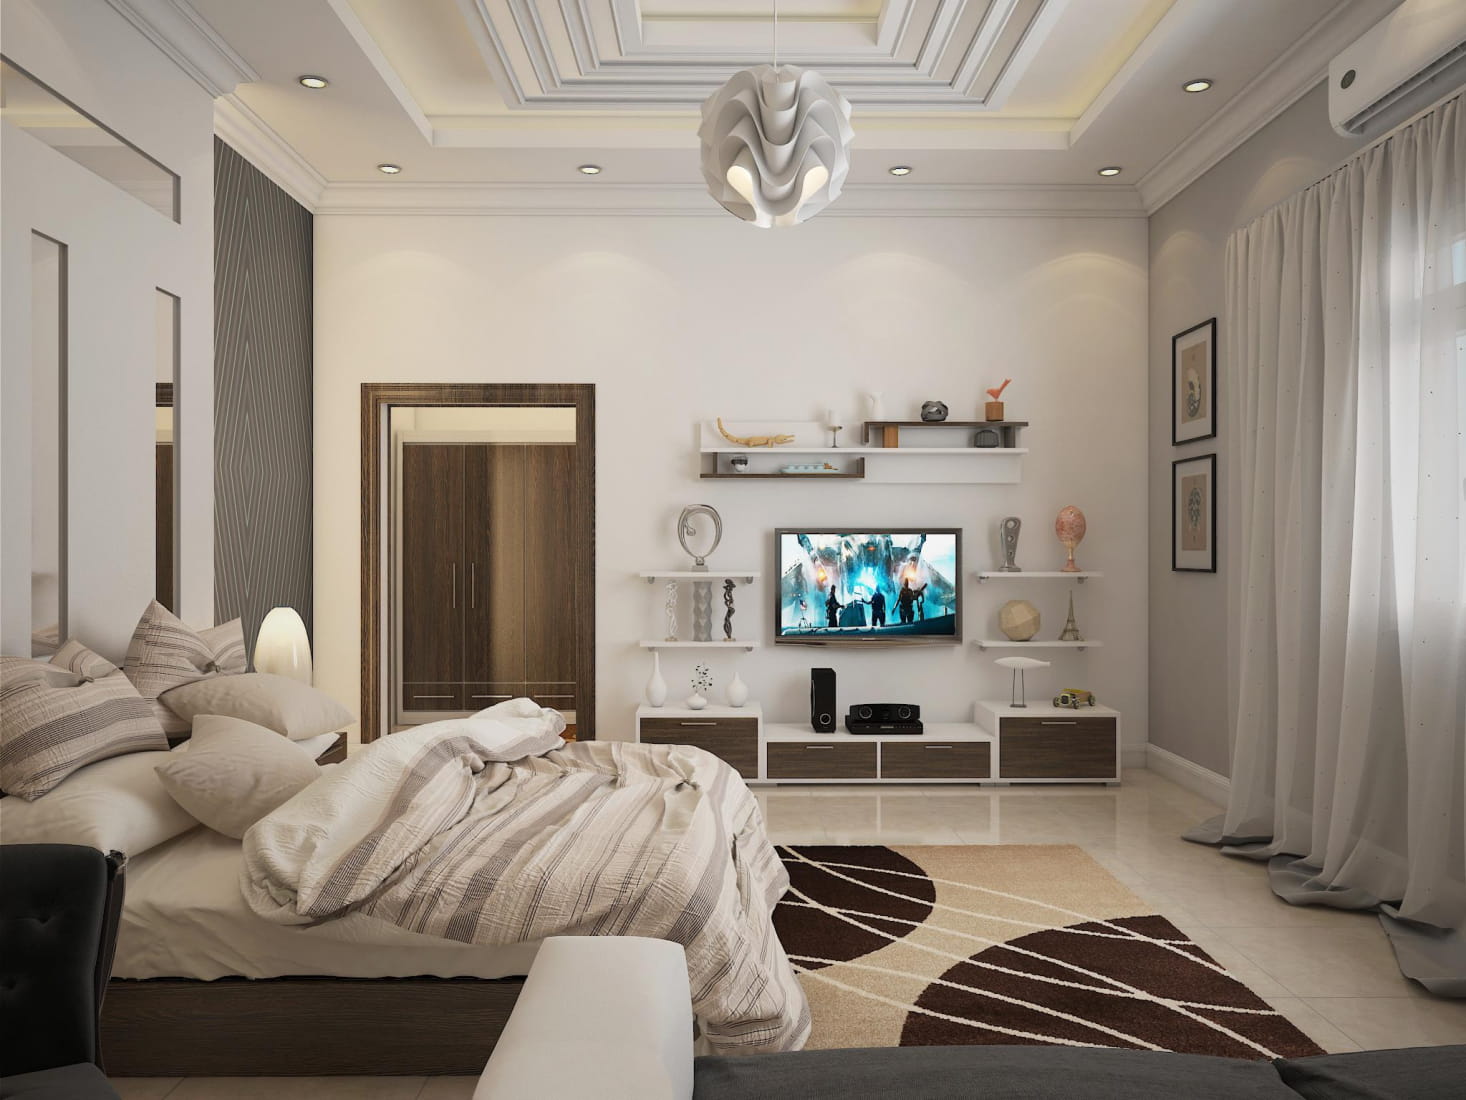 m-bedroom-modern